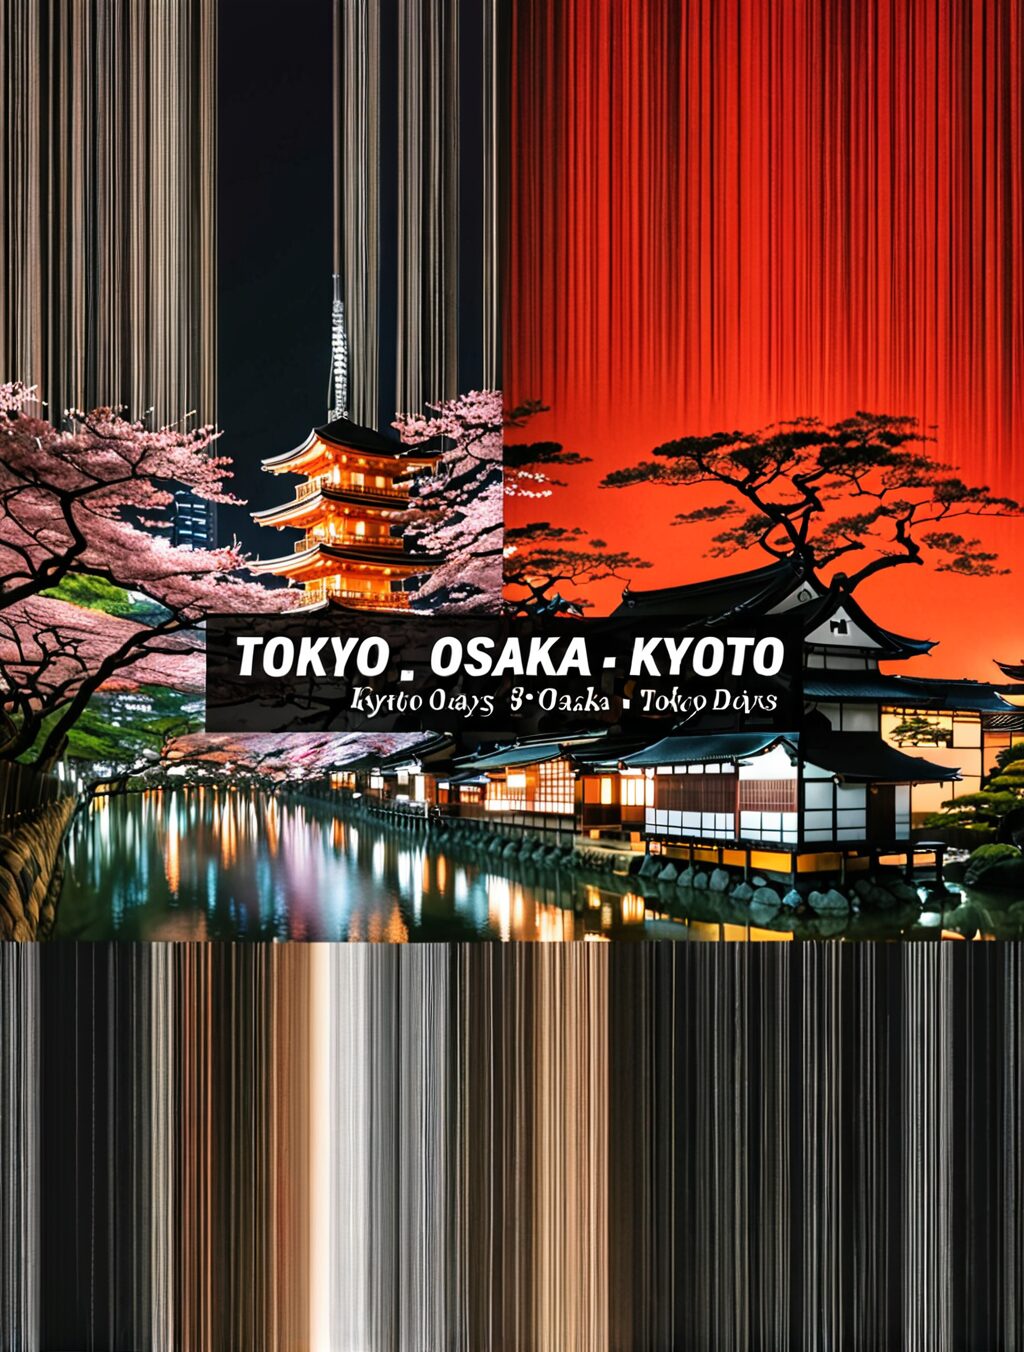 japan itinerary 12 days tokyo kyoto osaka